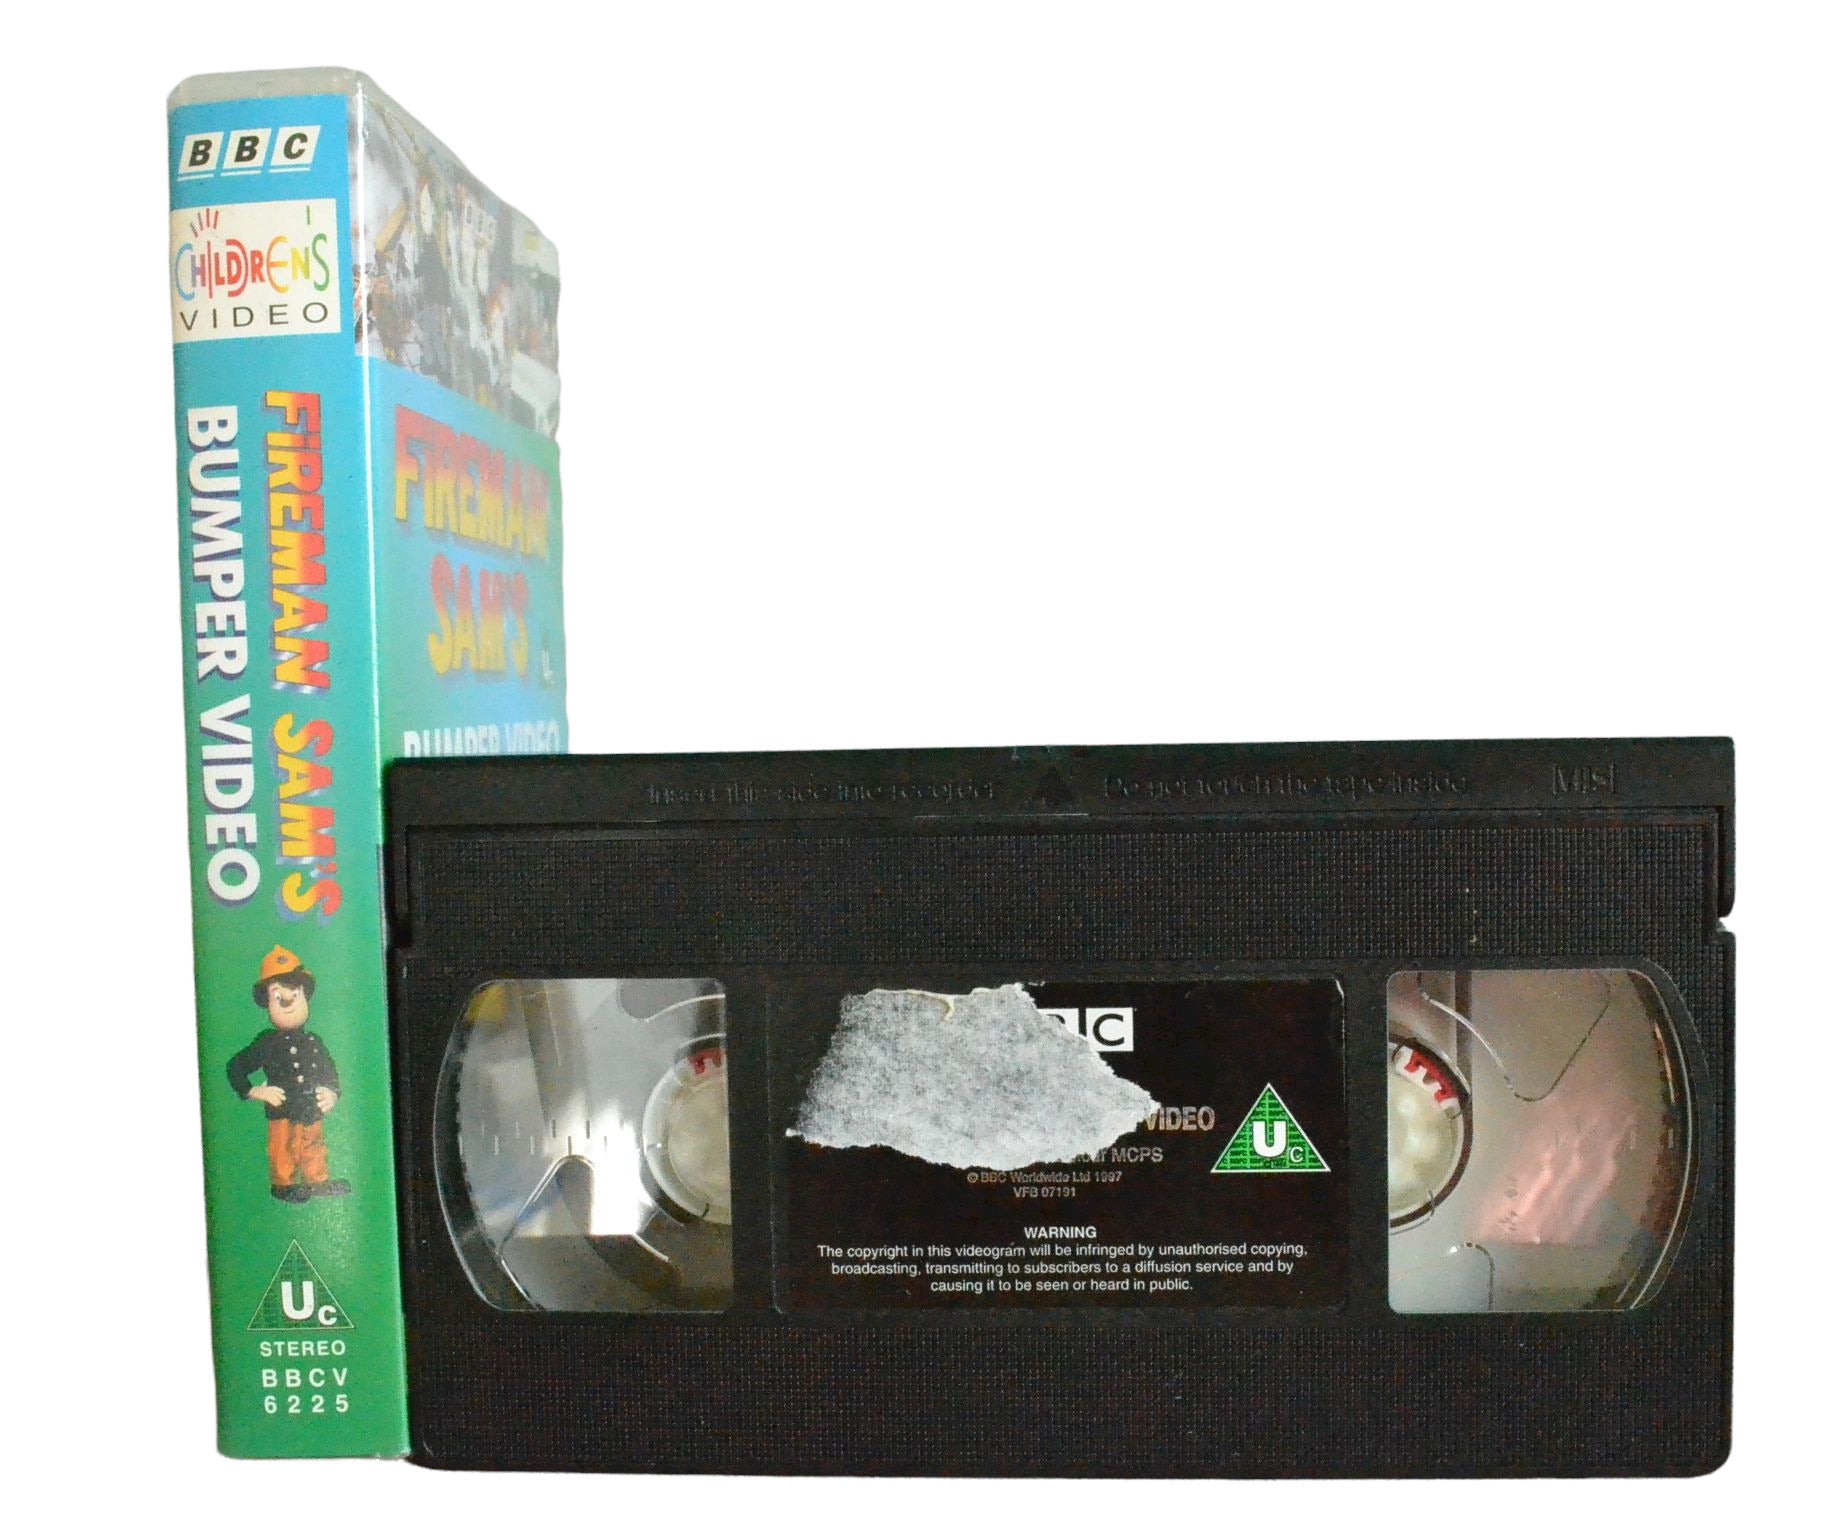 Fireman Sam's Bumper Video (7 Episodes) - BBC Video - Children's - Pal VHS-